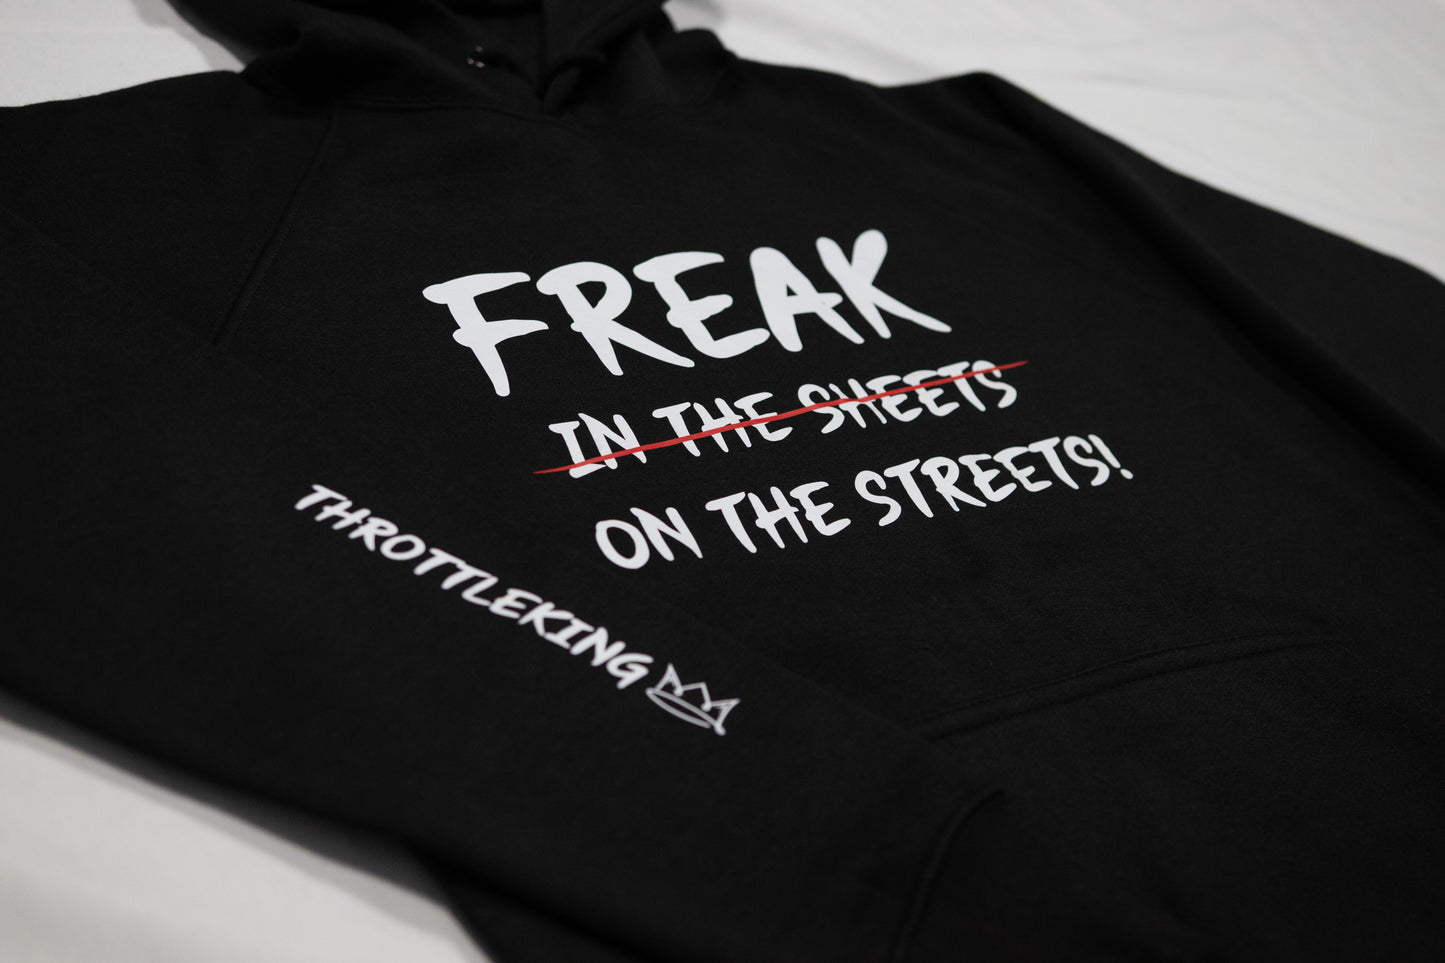 Freak on the Streets...